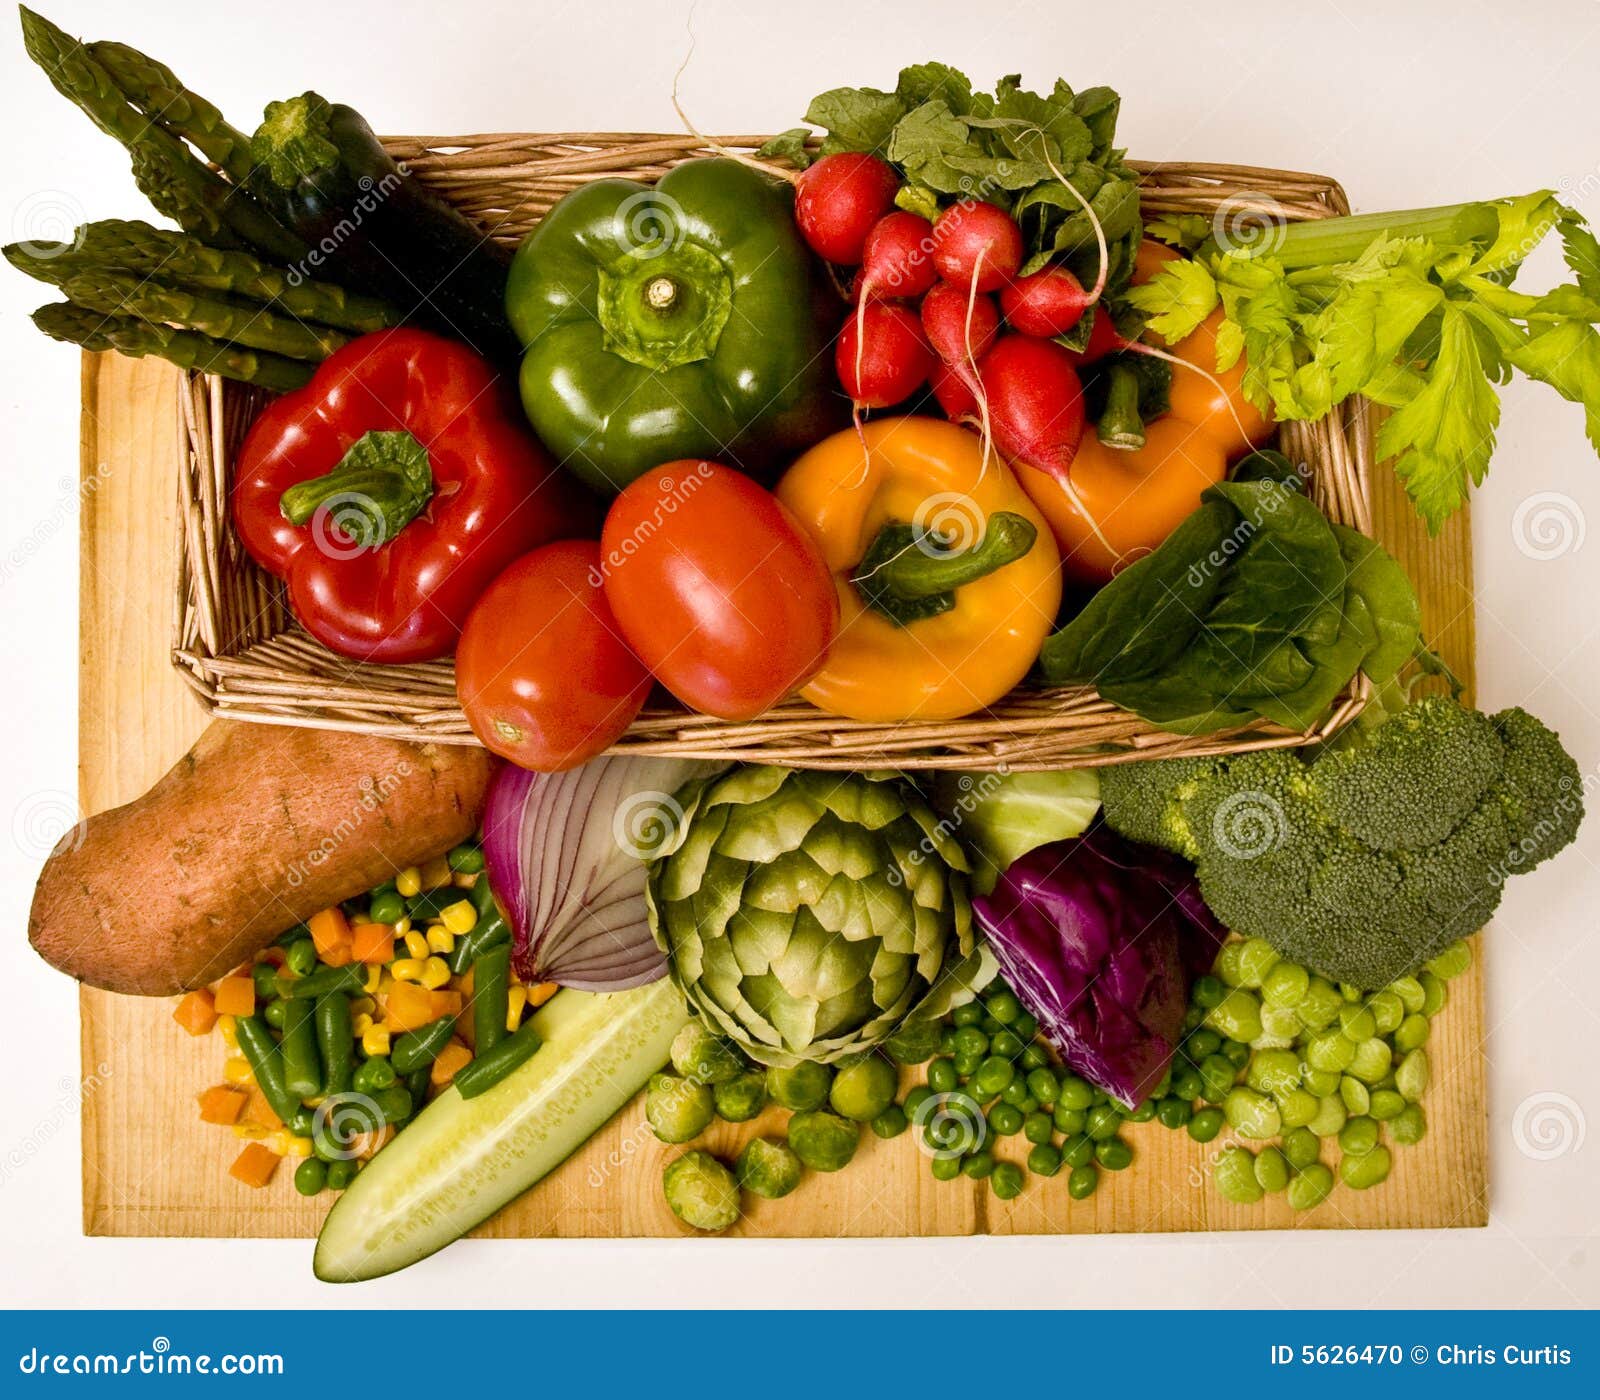 Vegetable basket stock photo. Image of pepper, cornucopia - 5626470